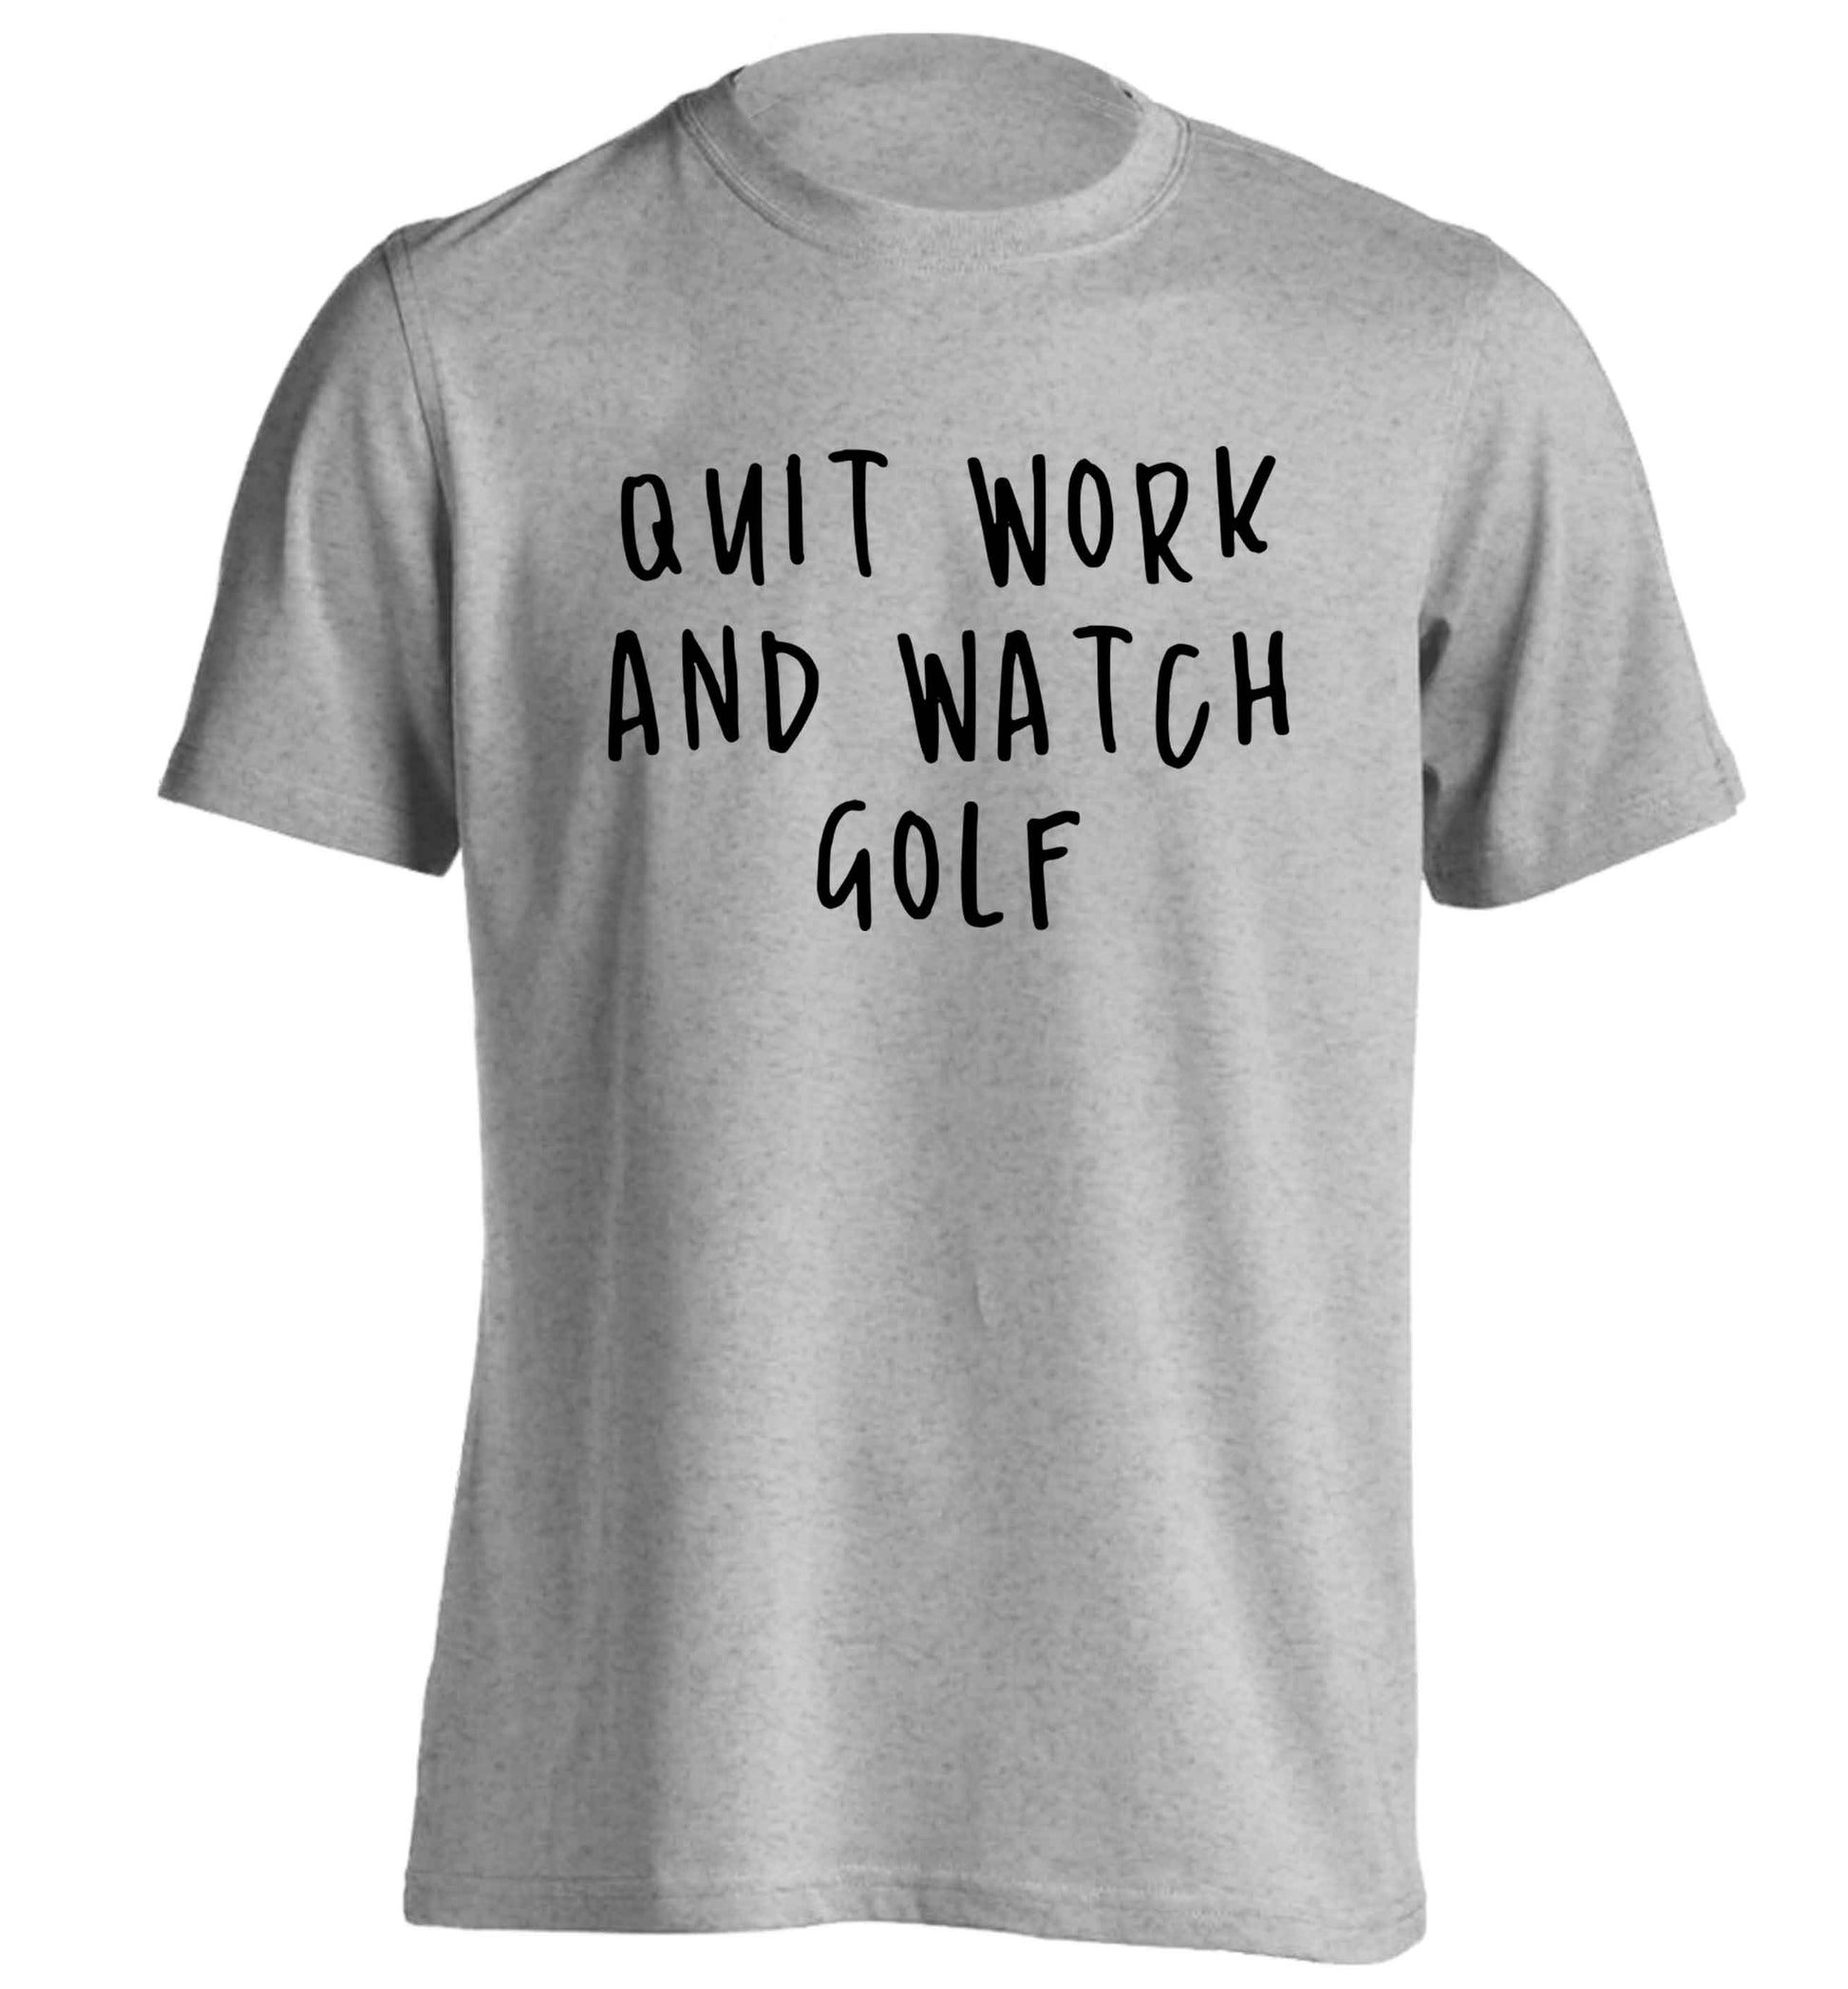 Quit work and watch golf adults unisex grey Tshirt 2XL